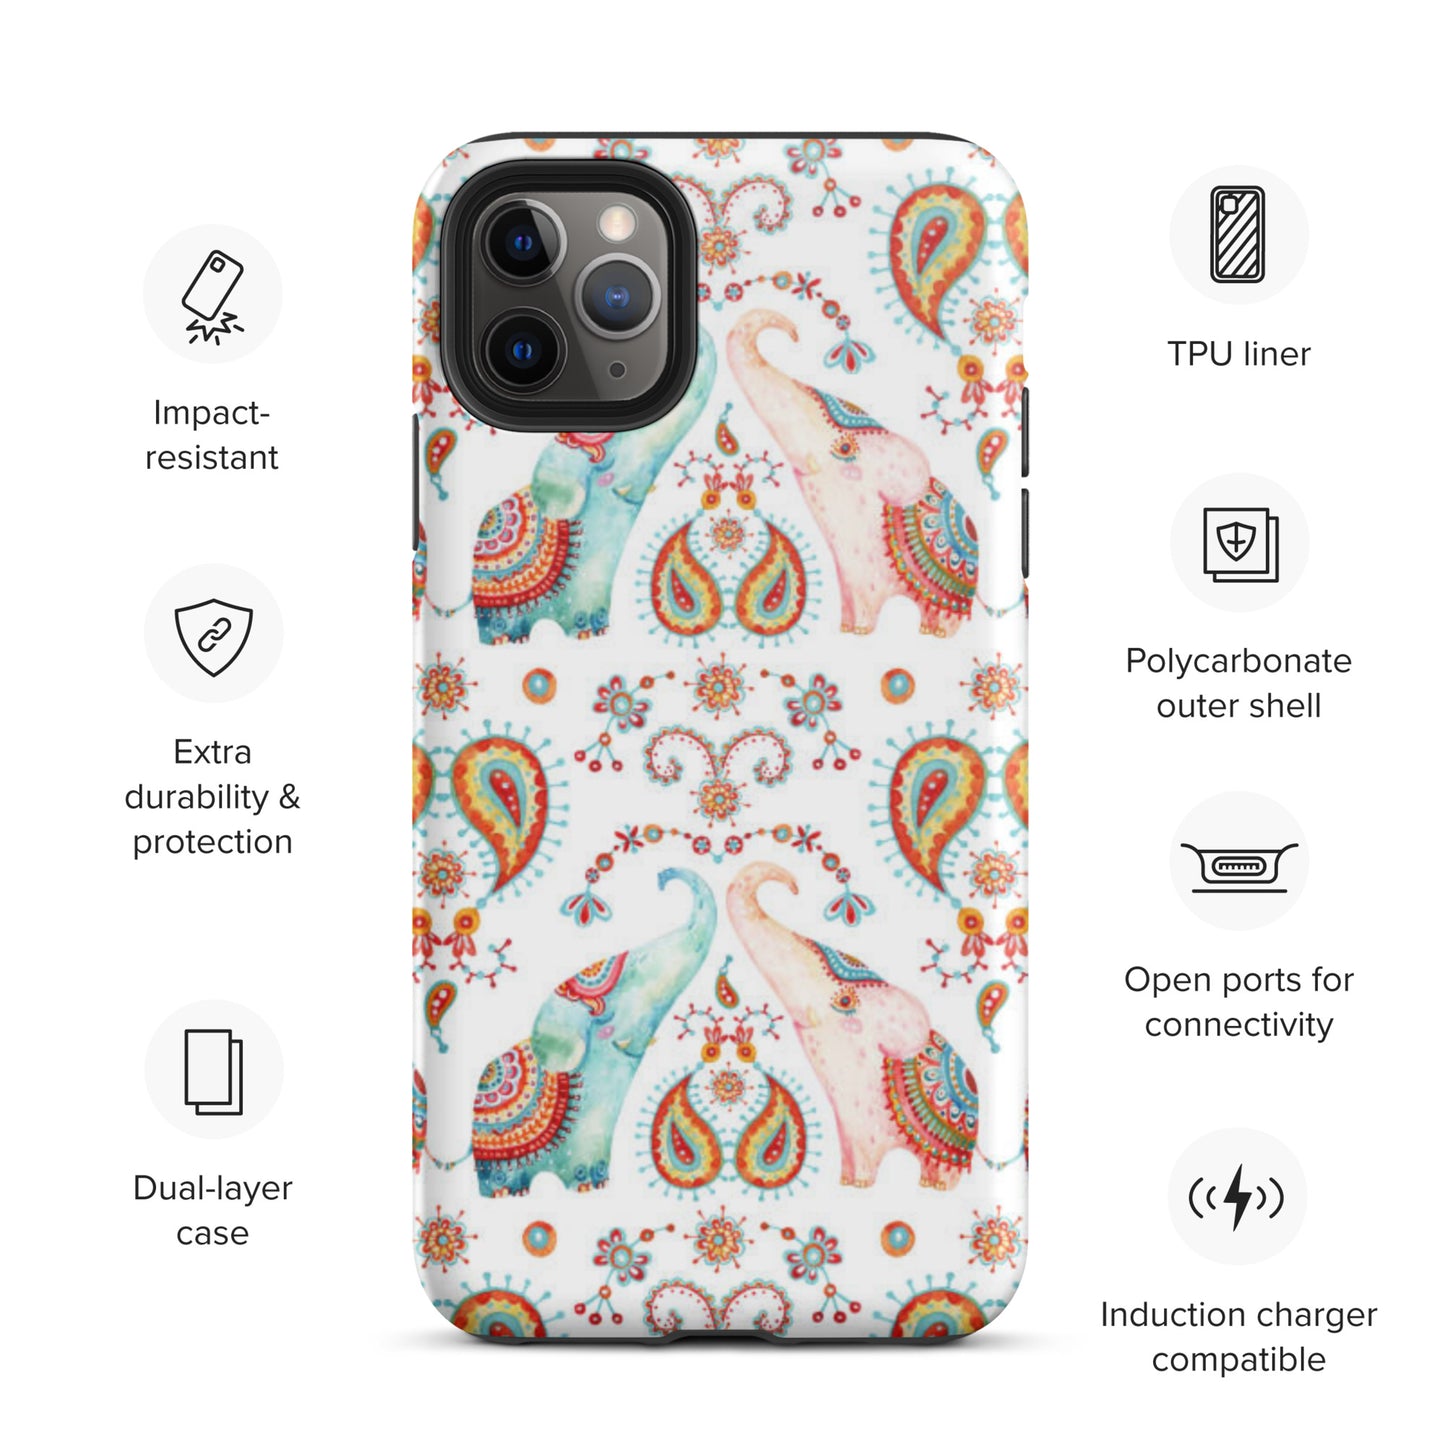 Indian Elephants Tough iPhone 11 Pro Max case